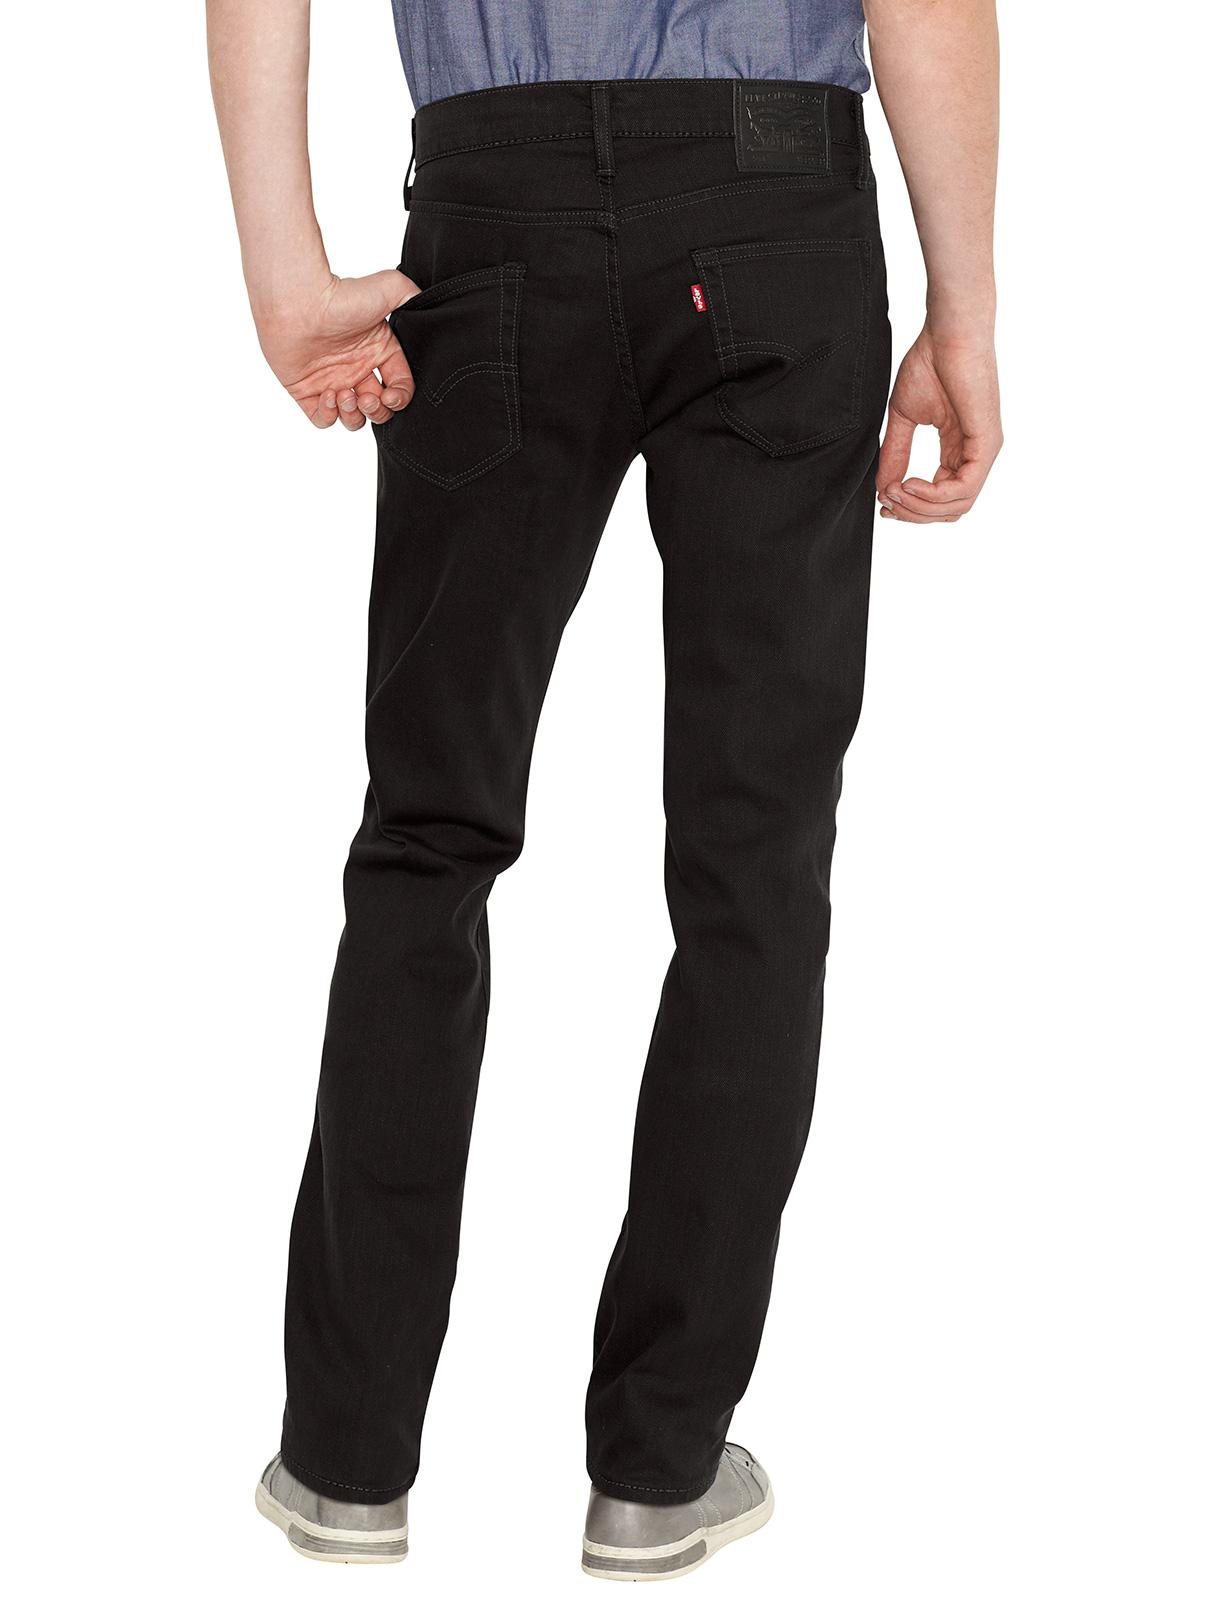 Levi's Denim Black 511 Slim Fit Nightshine Jeans for Men - Lyst